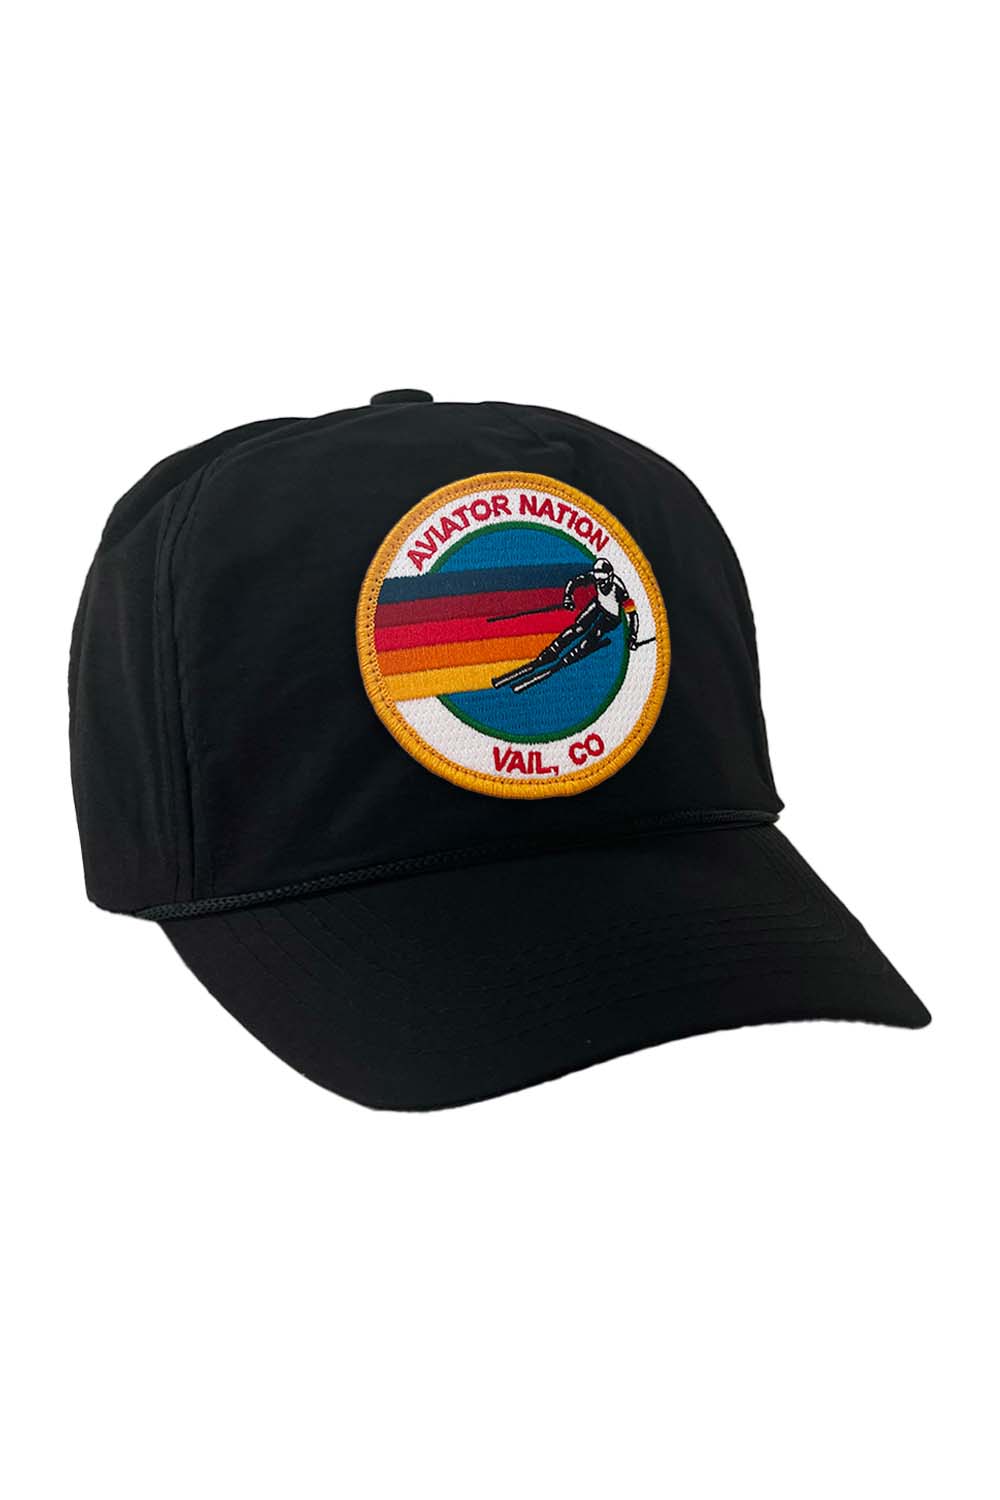 Trucker Hats - Aviator Nation